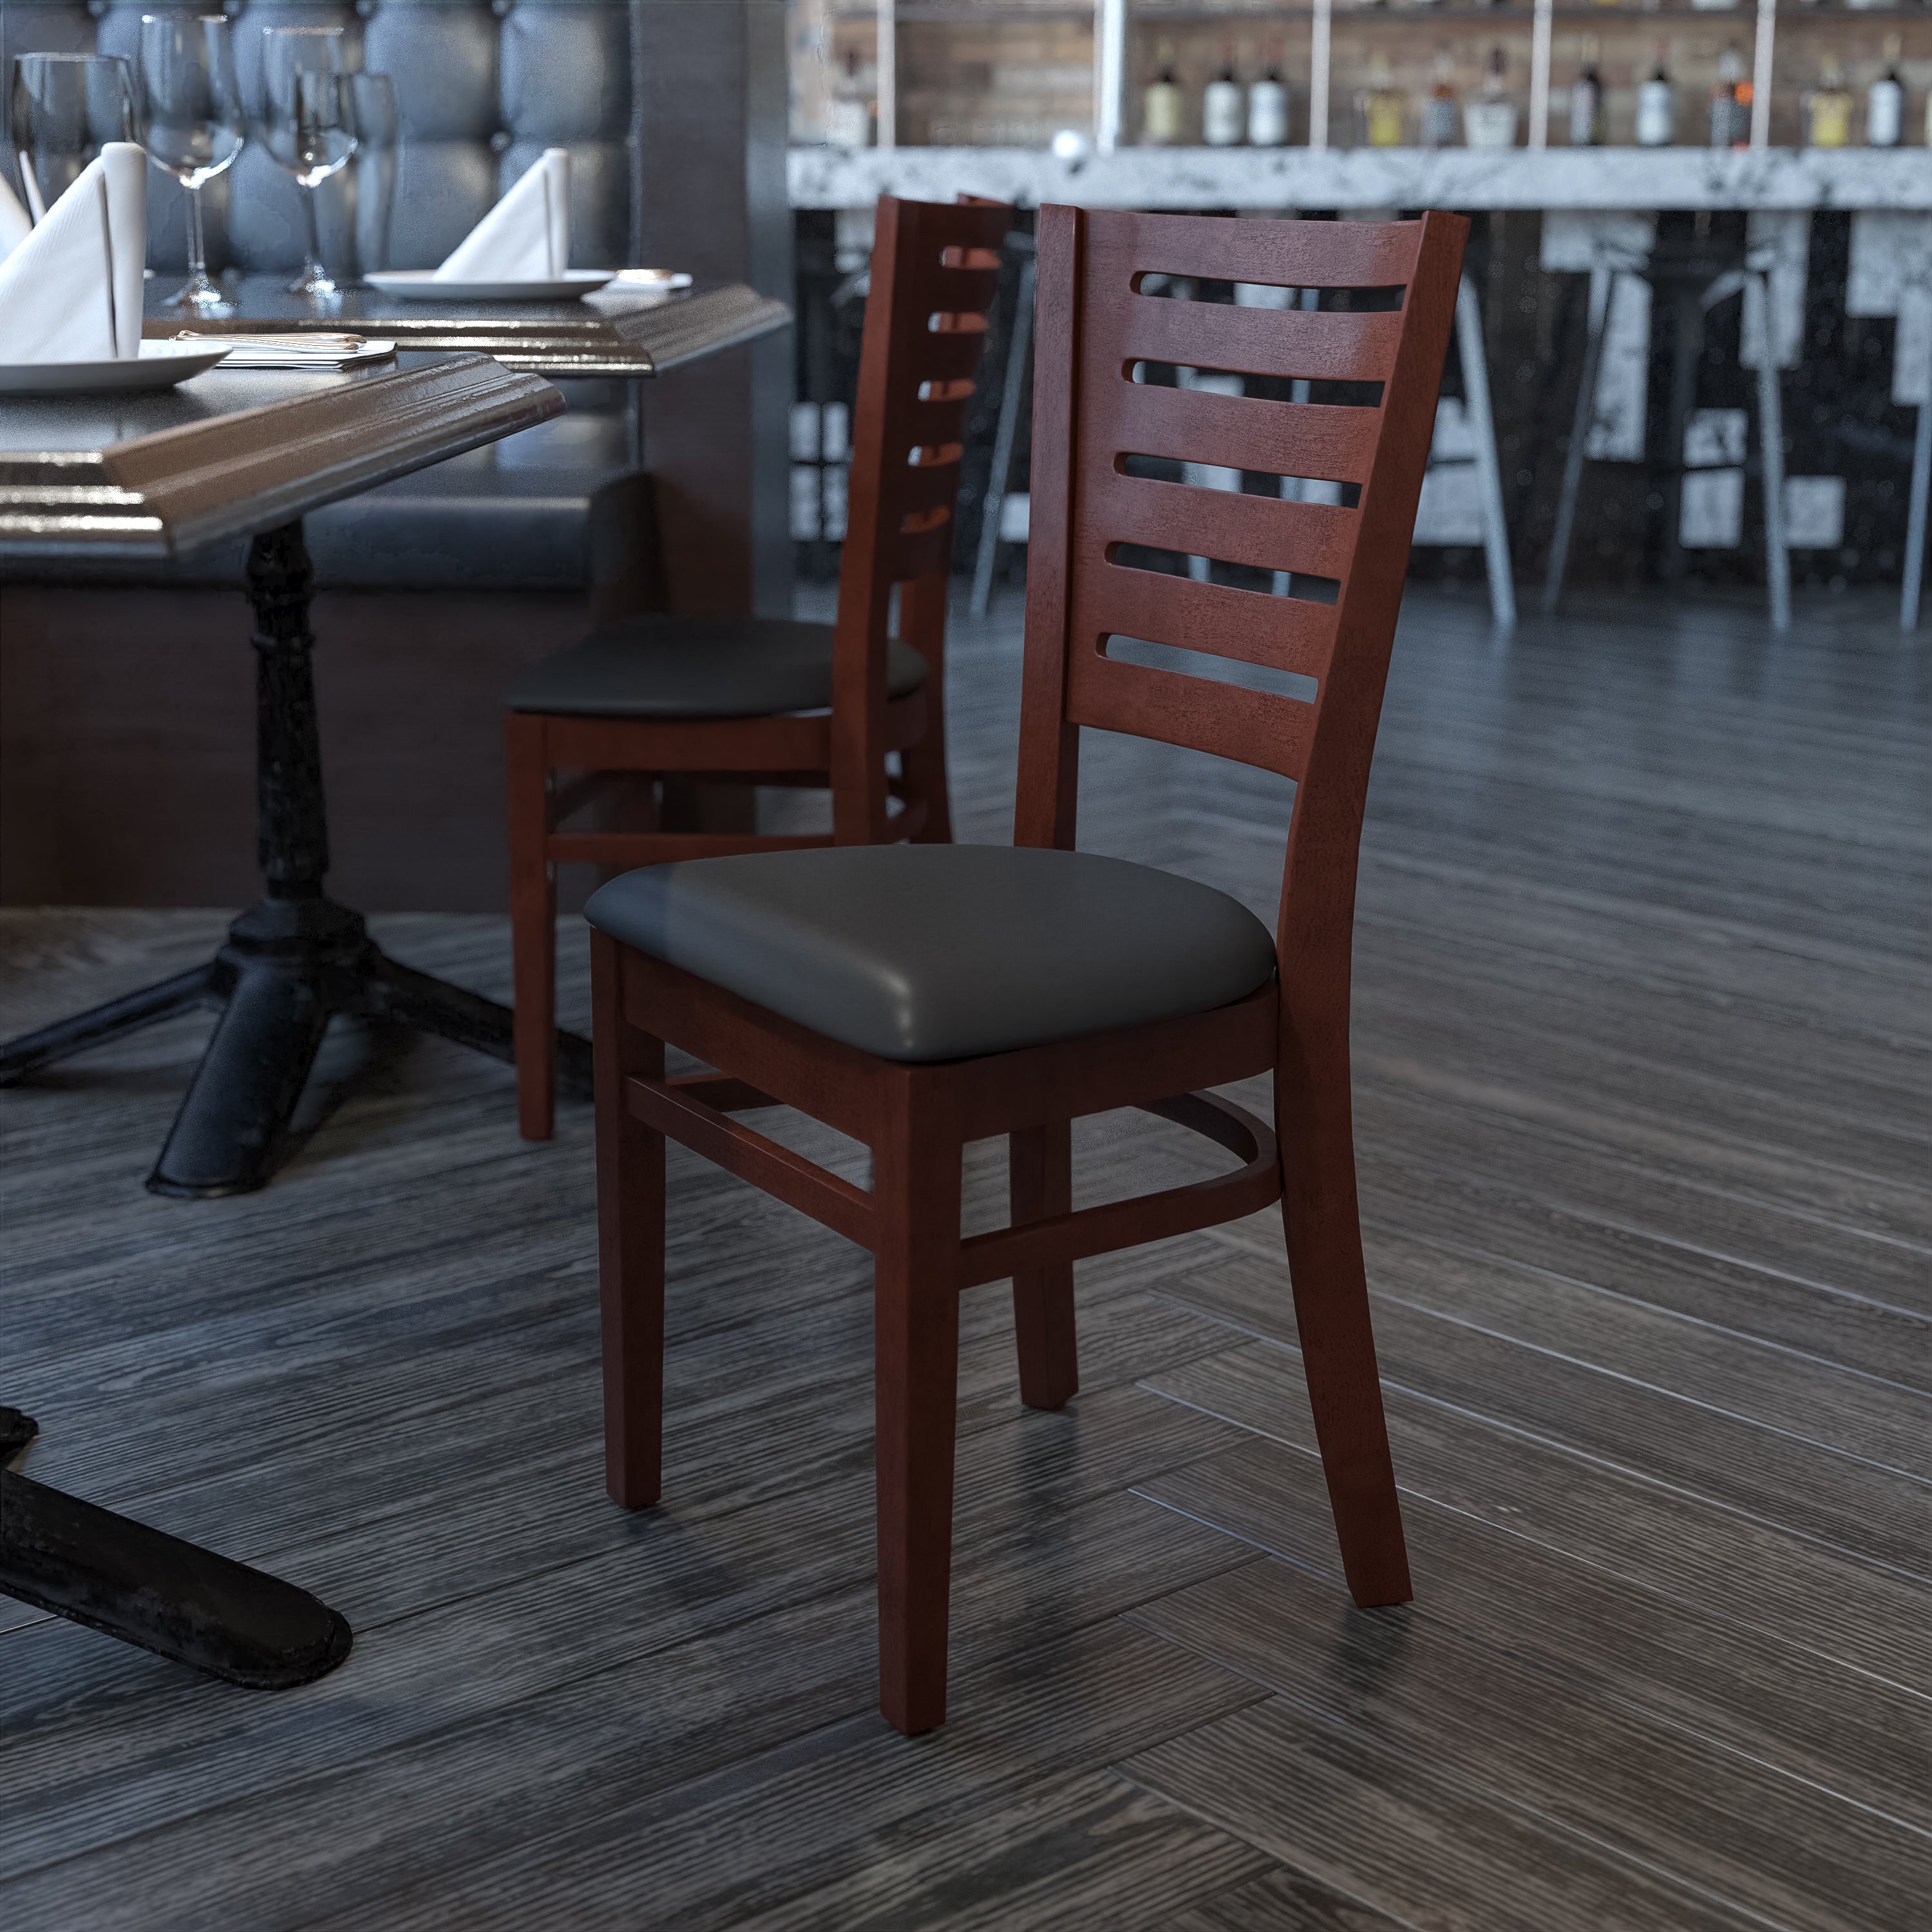 Slat Back Wooden Restaurant Chair-Restaurant Chair-Flash Furniture-Wall2Wall Furnishings